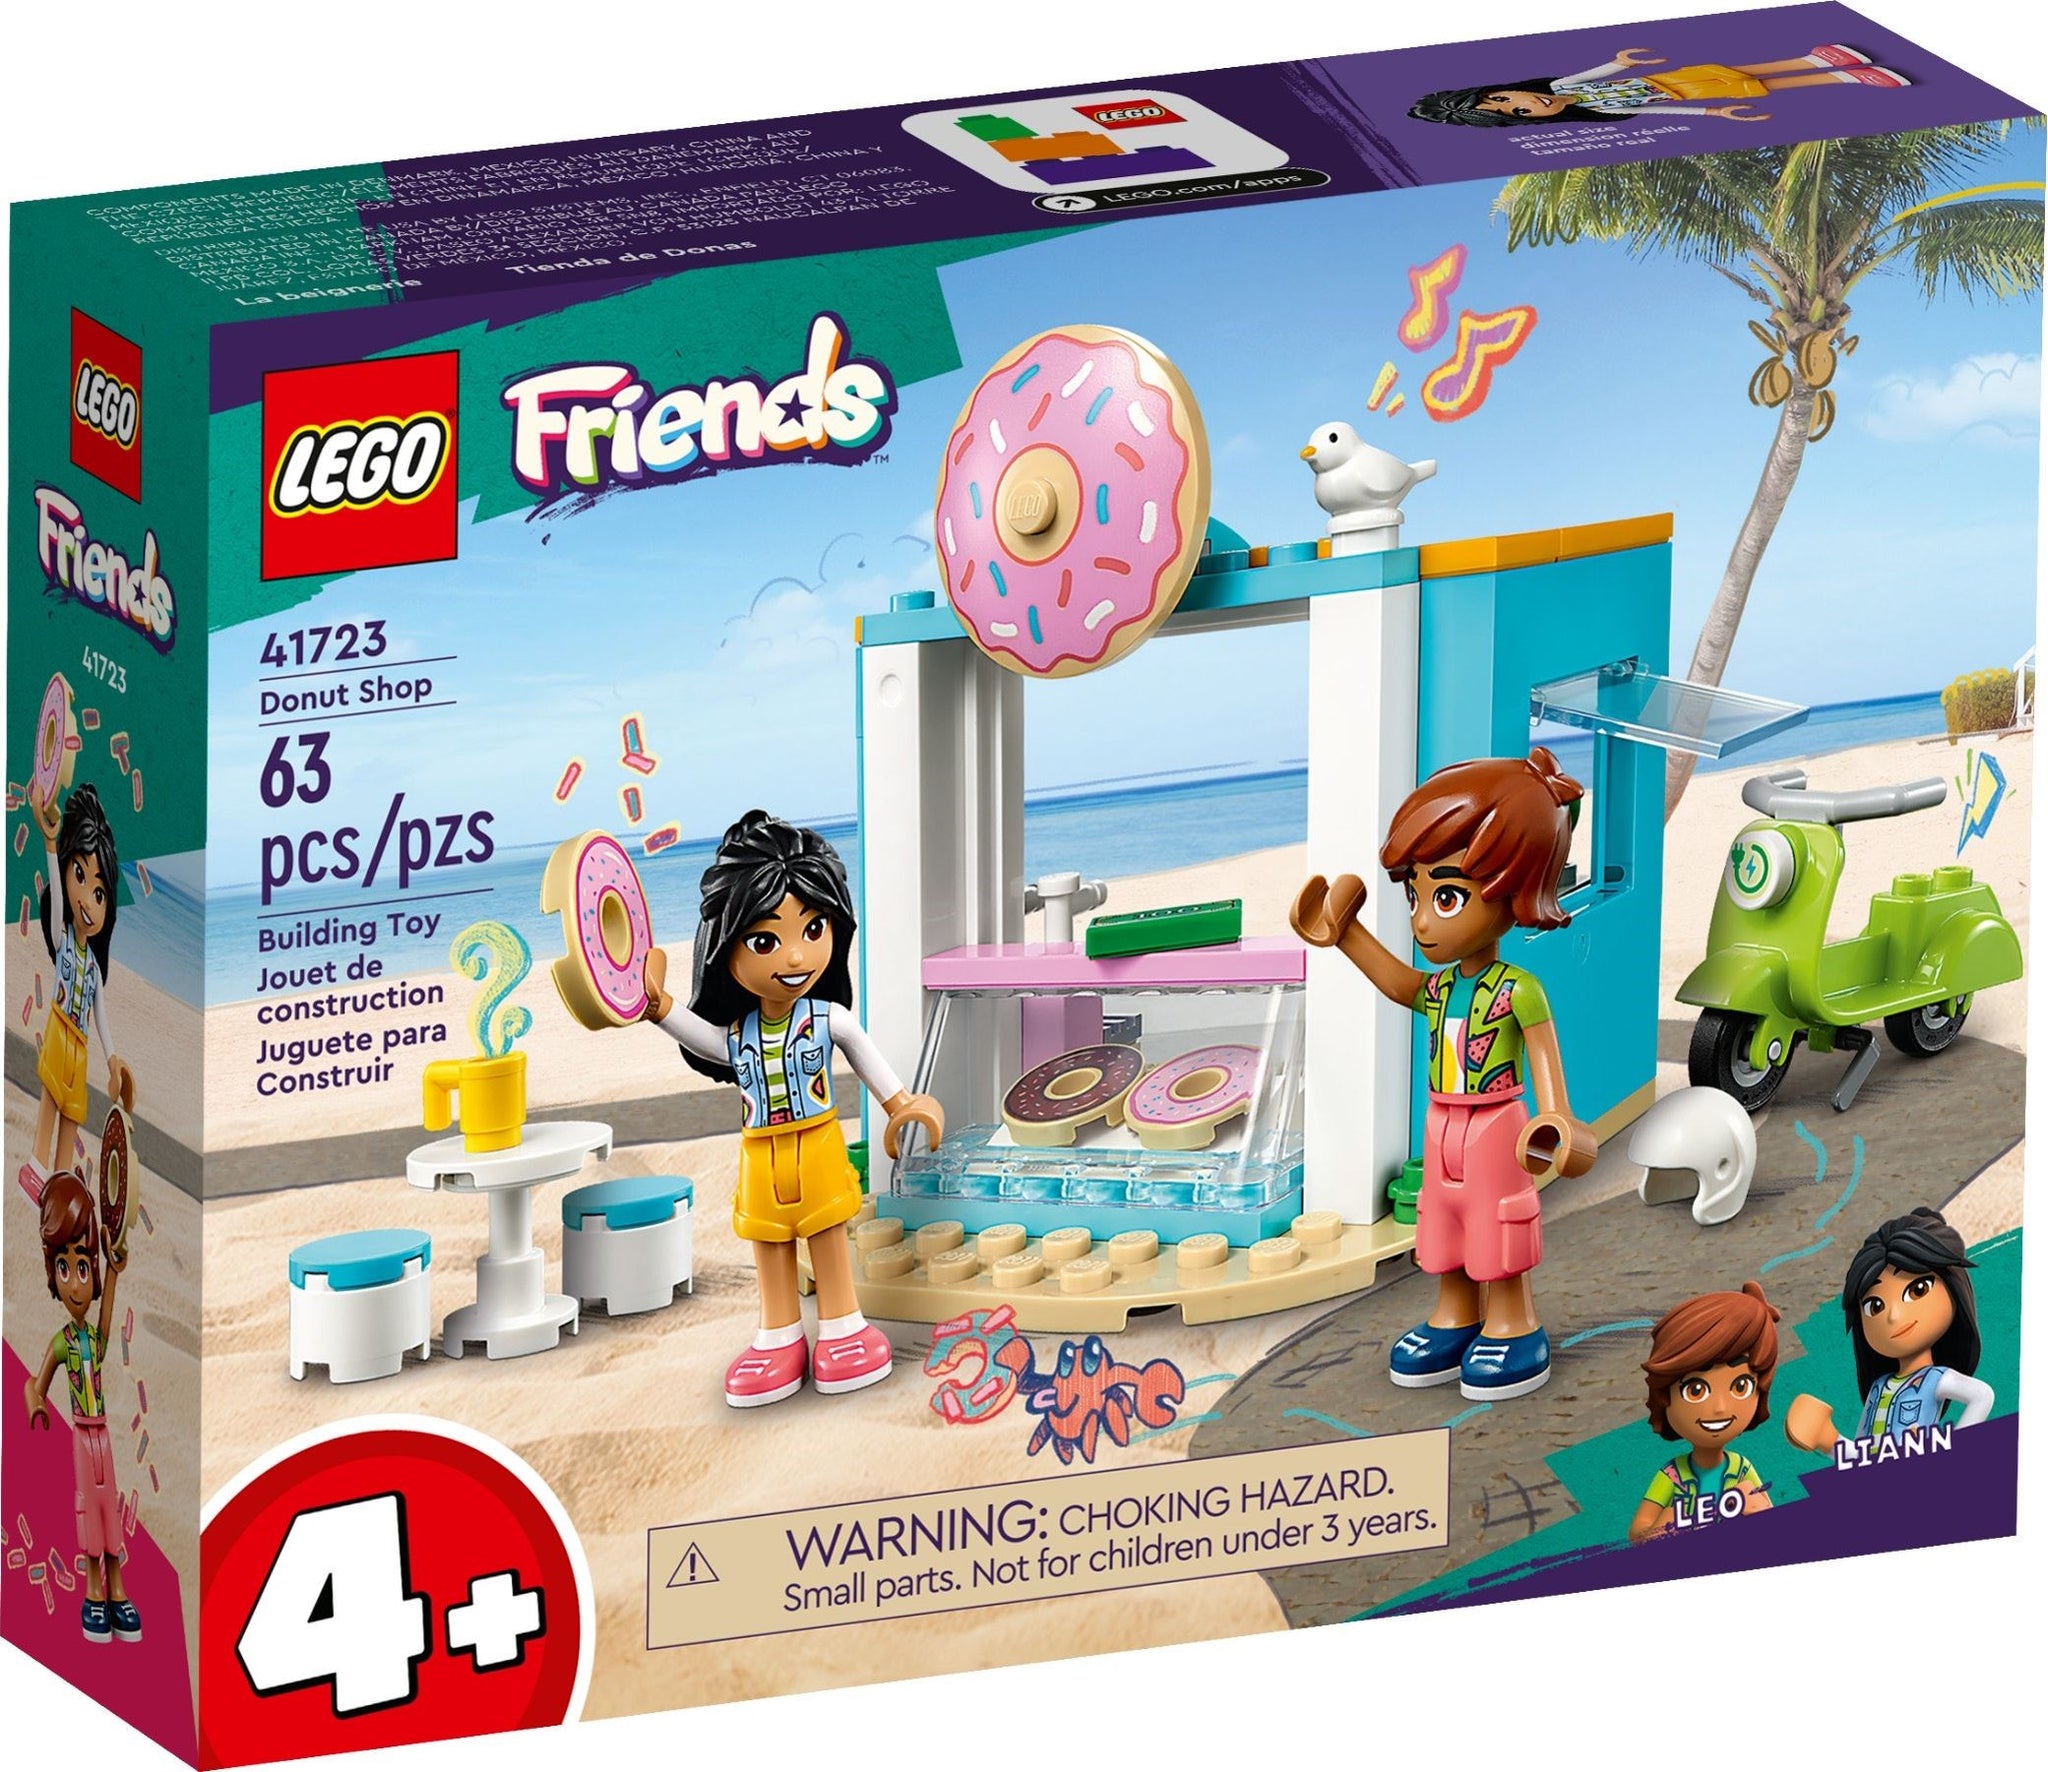 restaurant margen Søgemaskine markedsføring LEGO® Friends 41723 Donut Shop (63 pieces) – AESOP'S FABLE